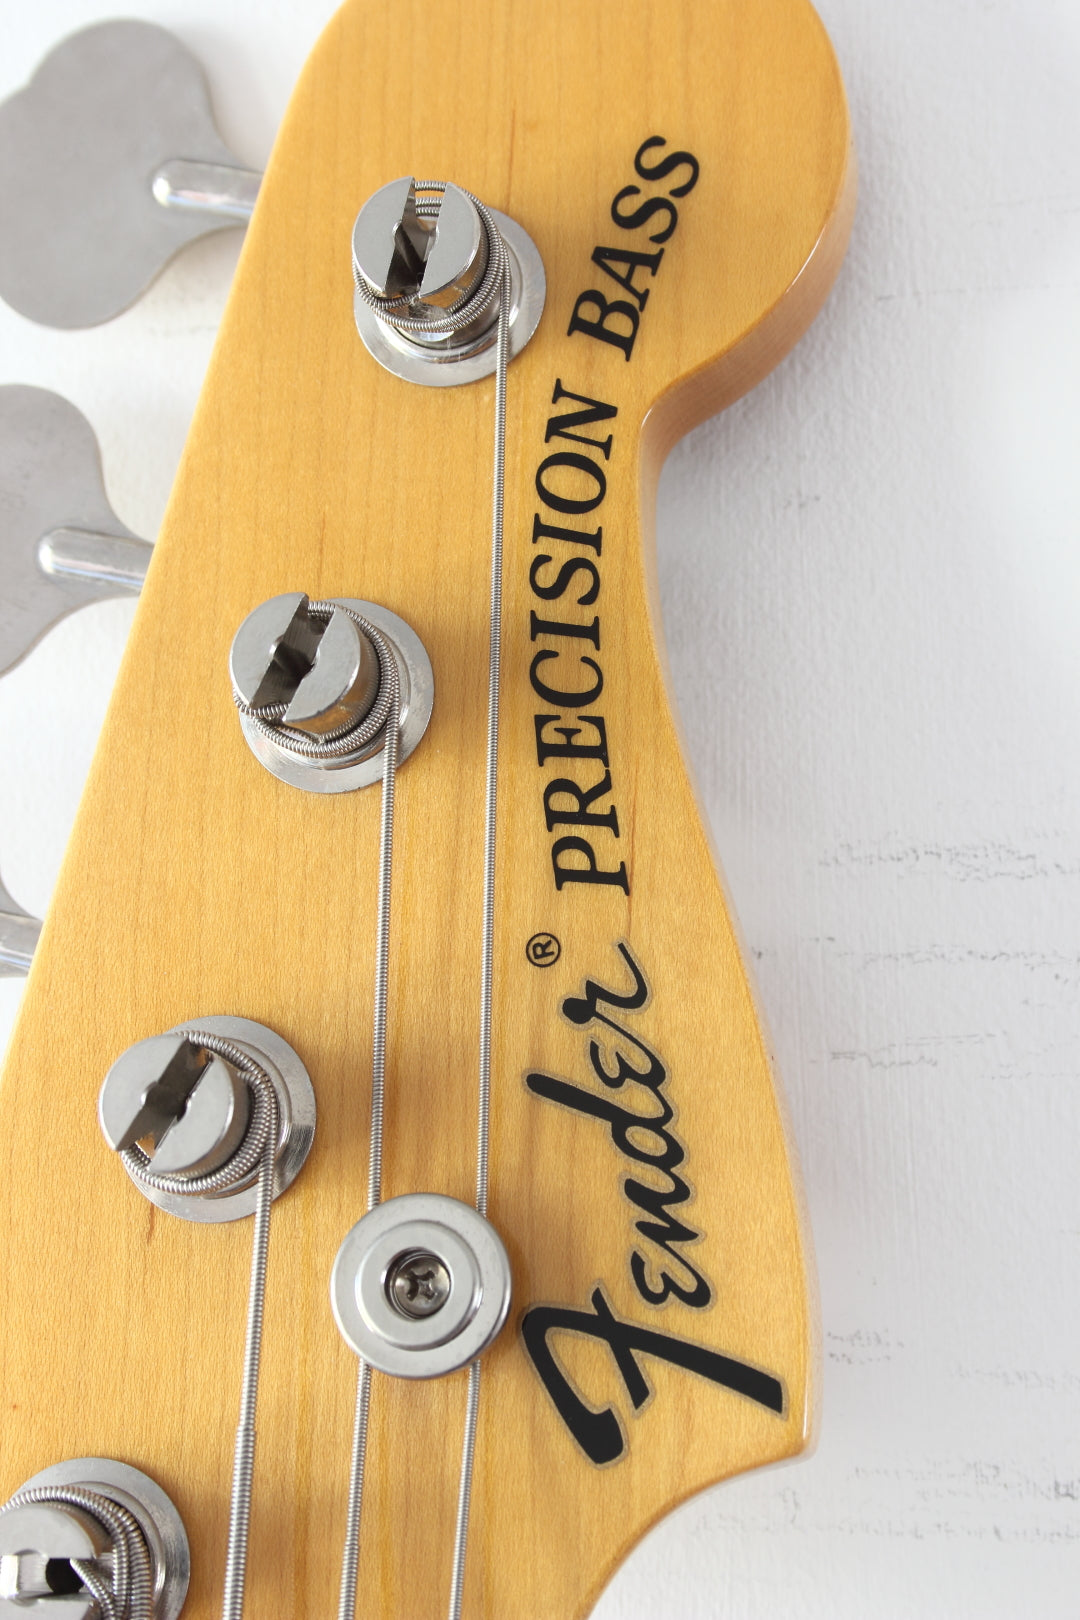 Fender '70 Reissue Precision Bass Olympic White 2004-05